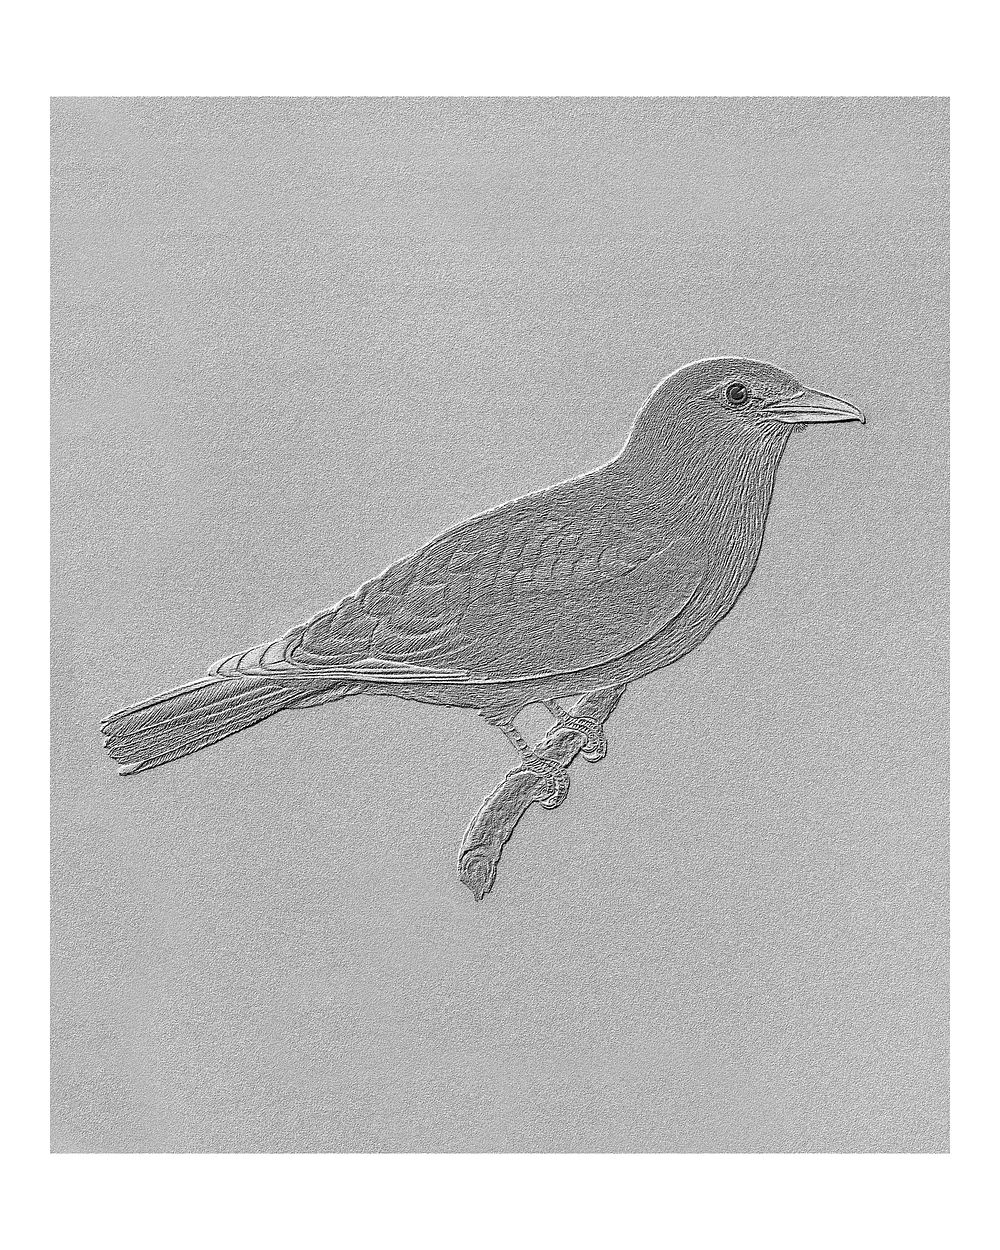 European roller bird vintage illustration wall art print and poster design remix from original artwork.